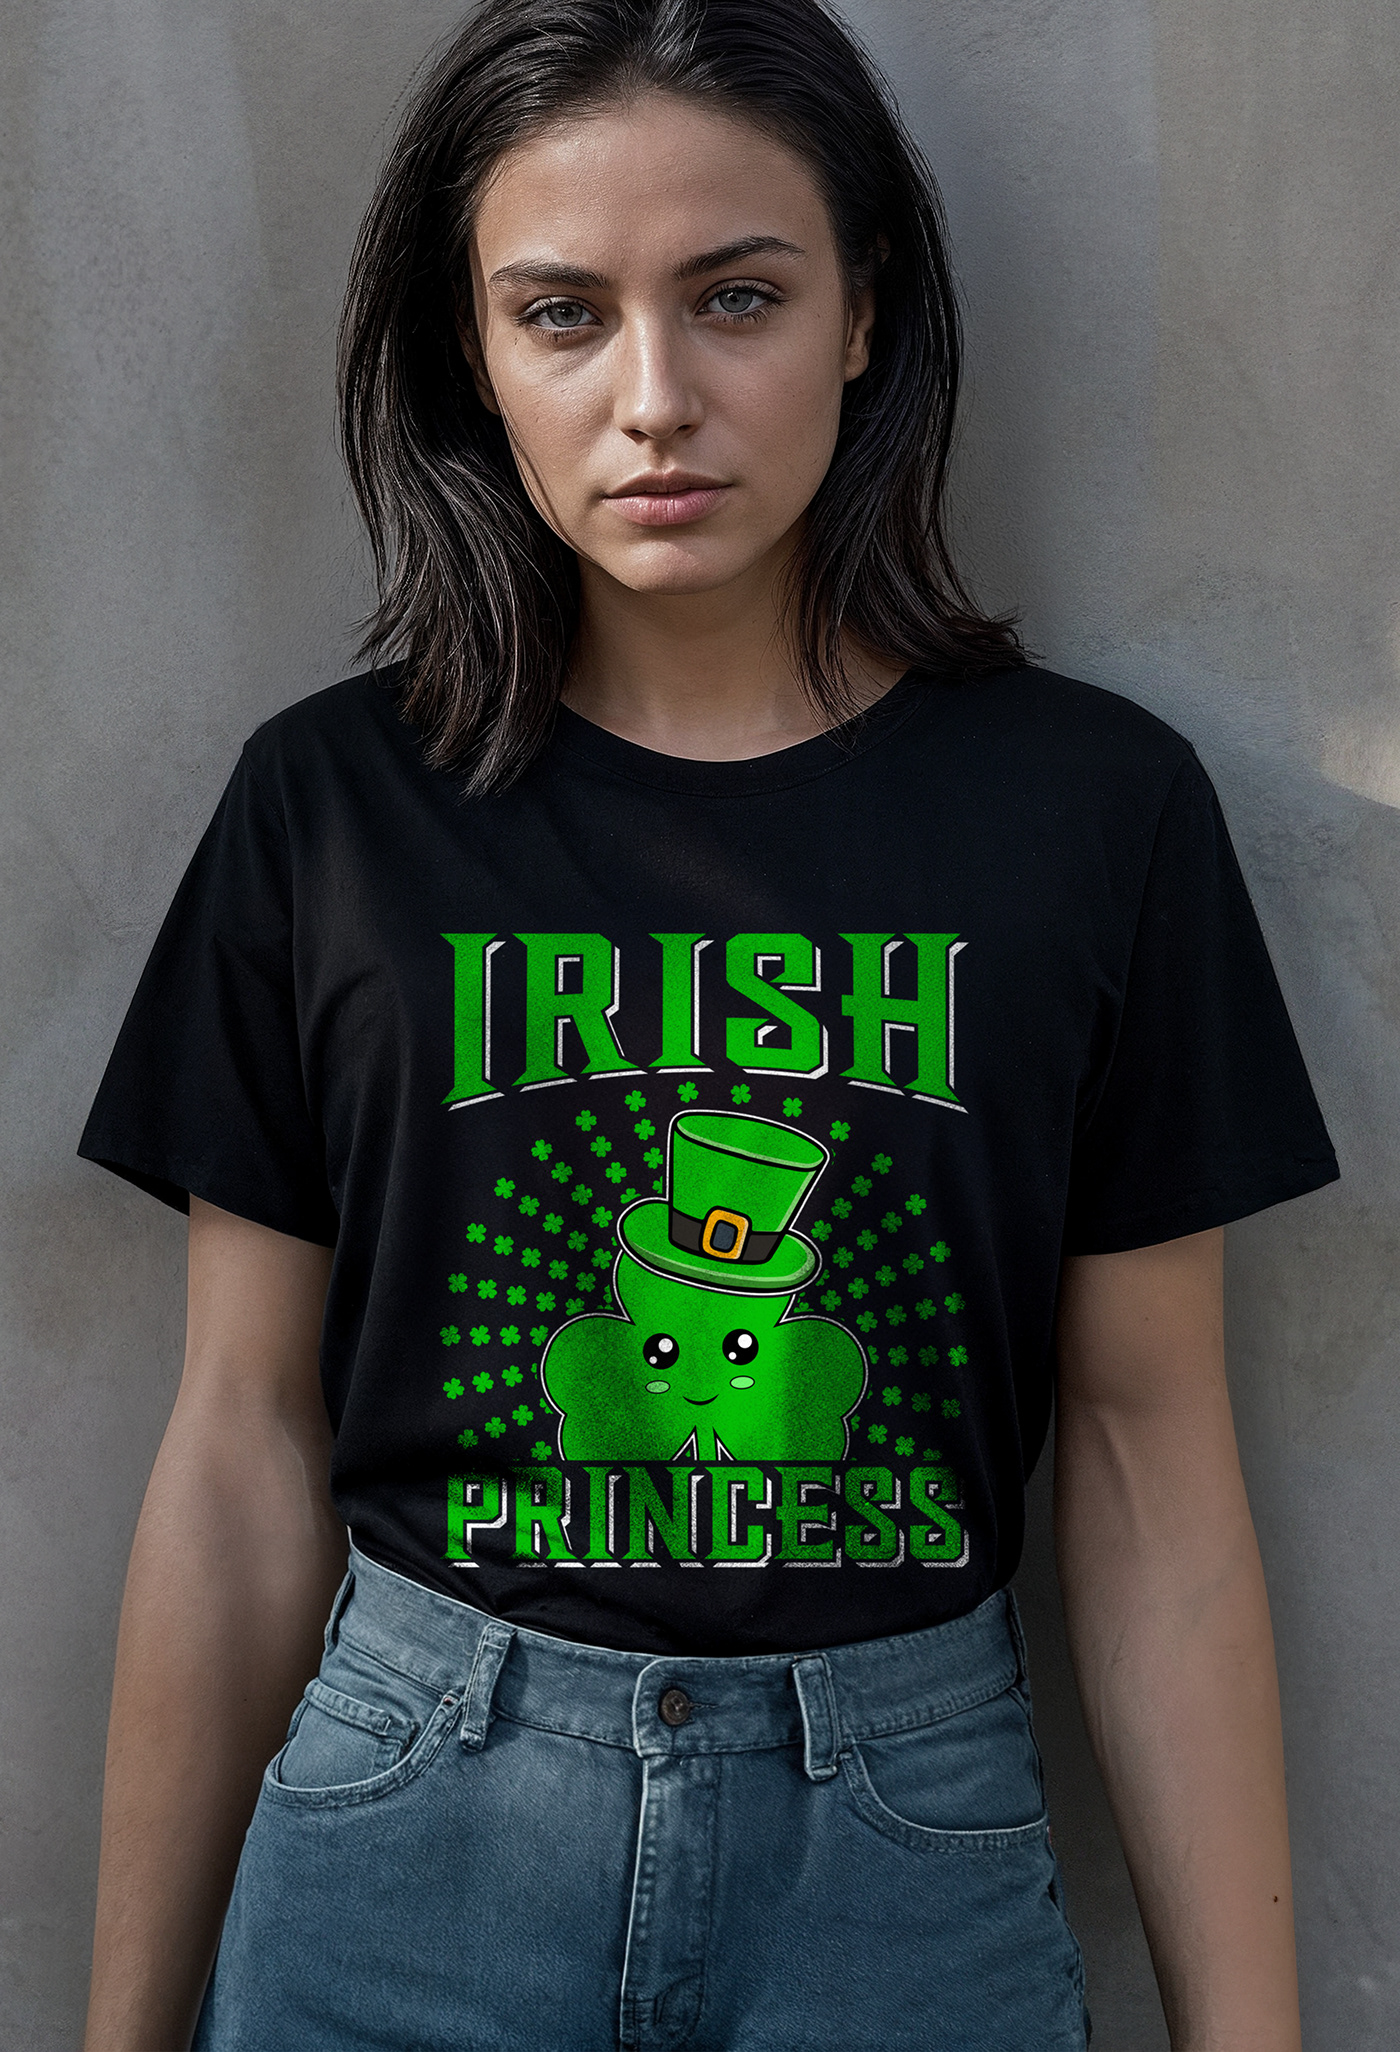 St. Patrick's Day T-shirt Design